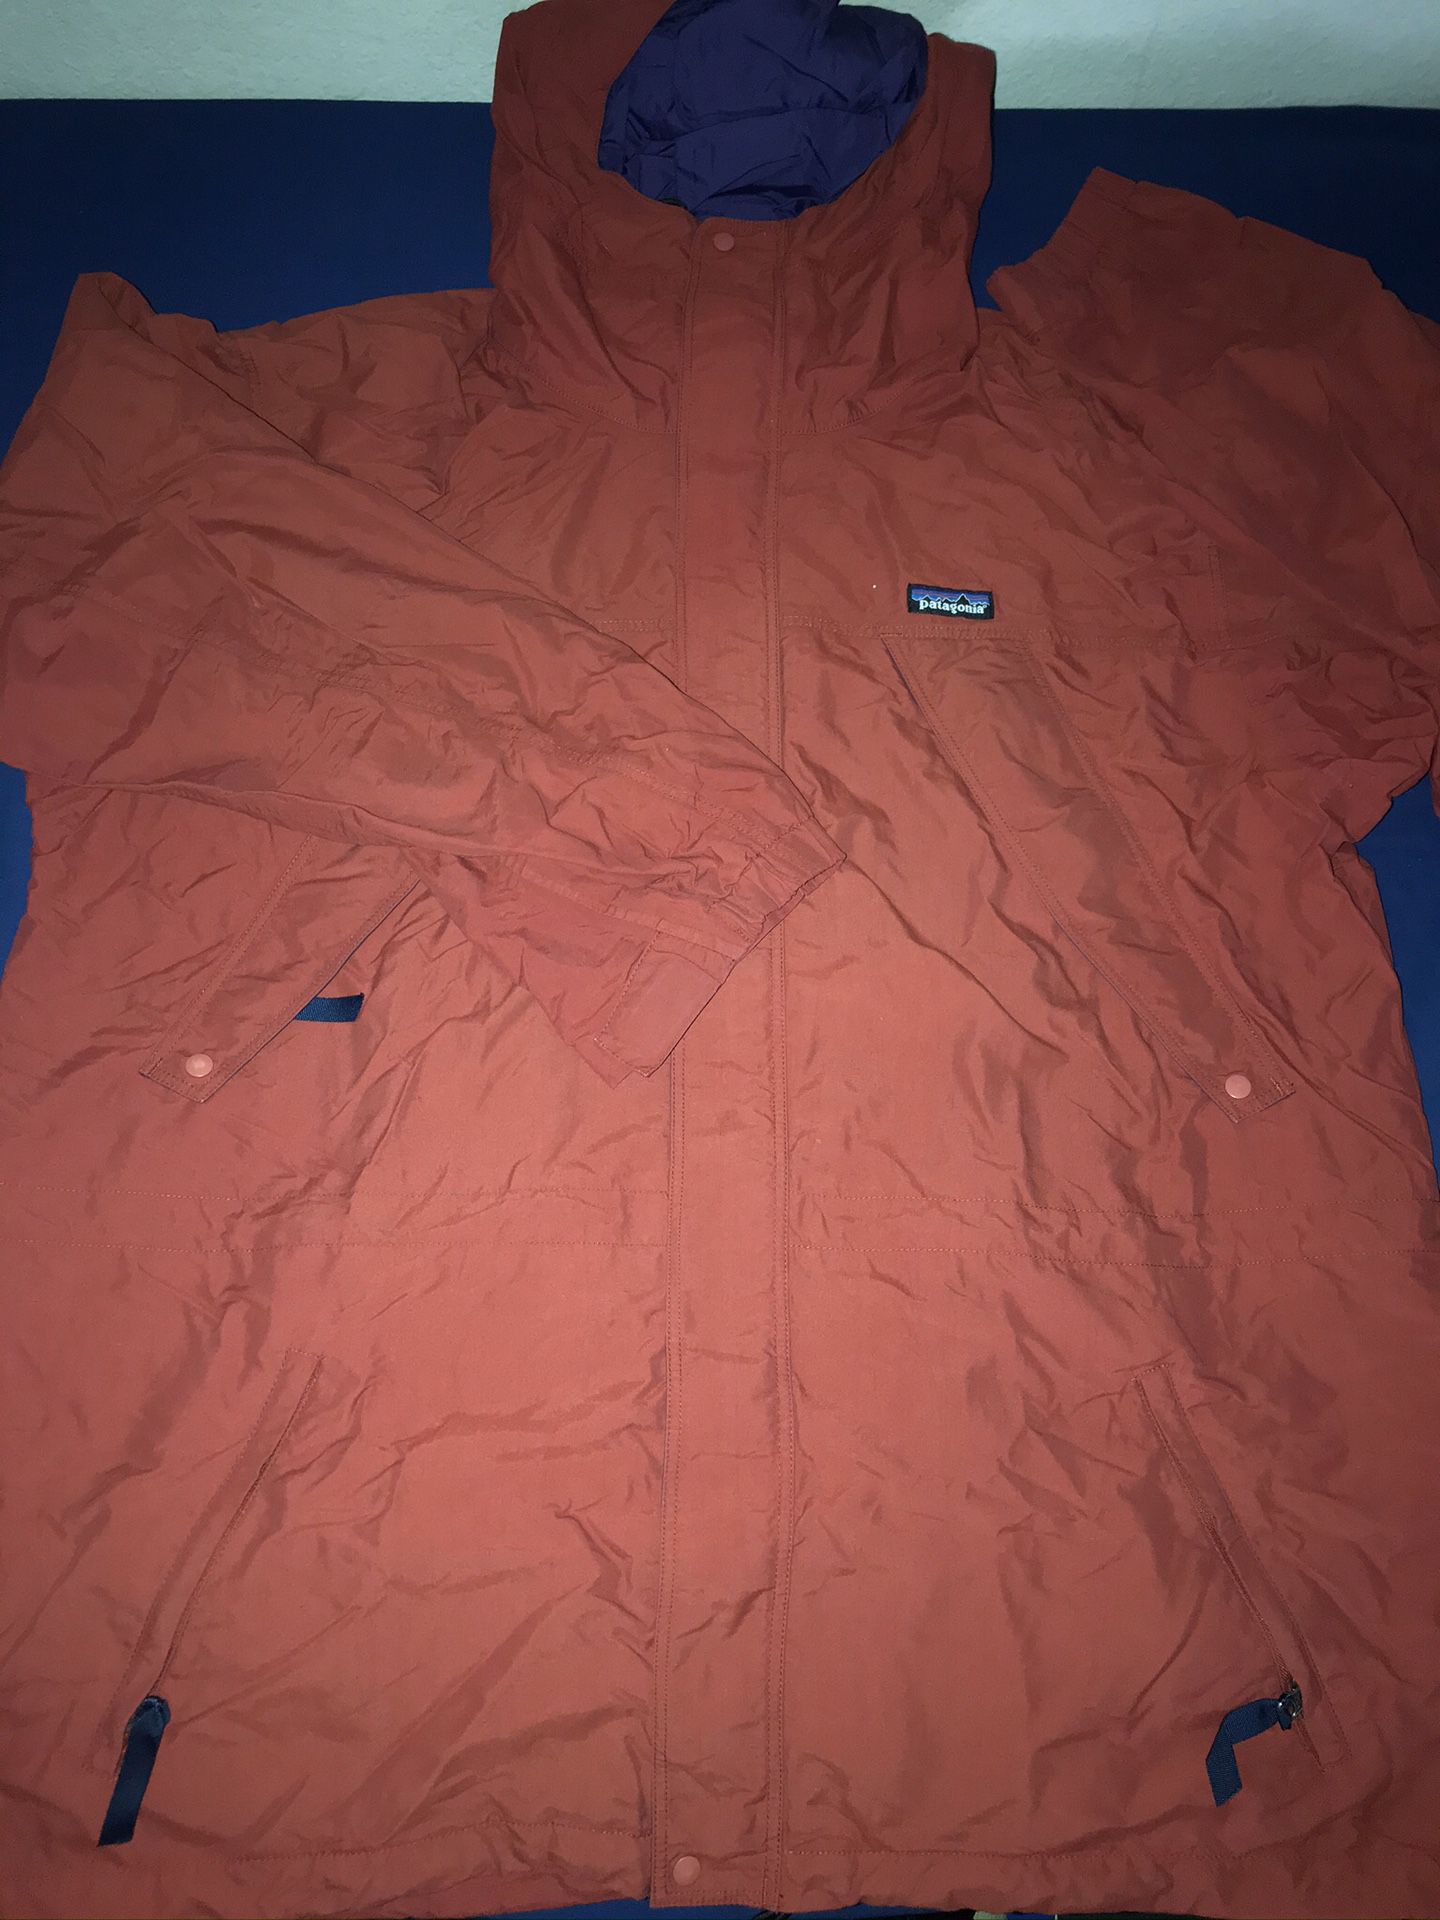 Patagonia Parka Shell jacket coat size XL